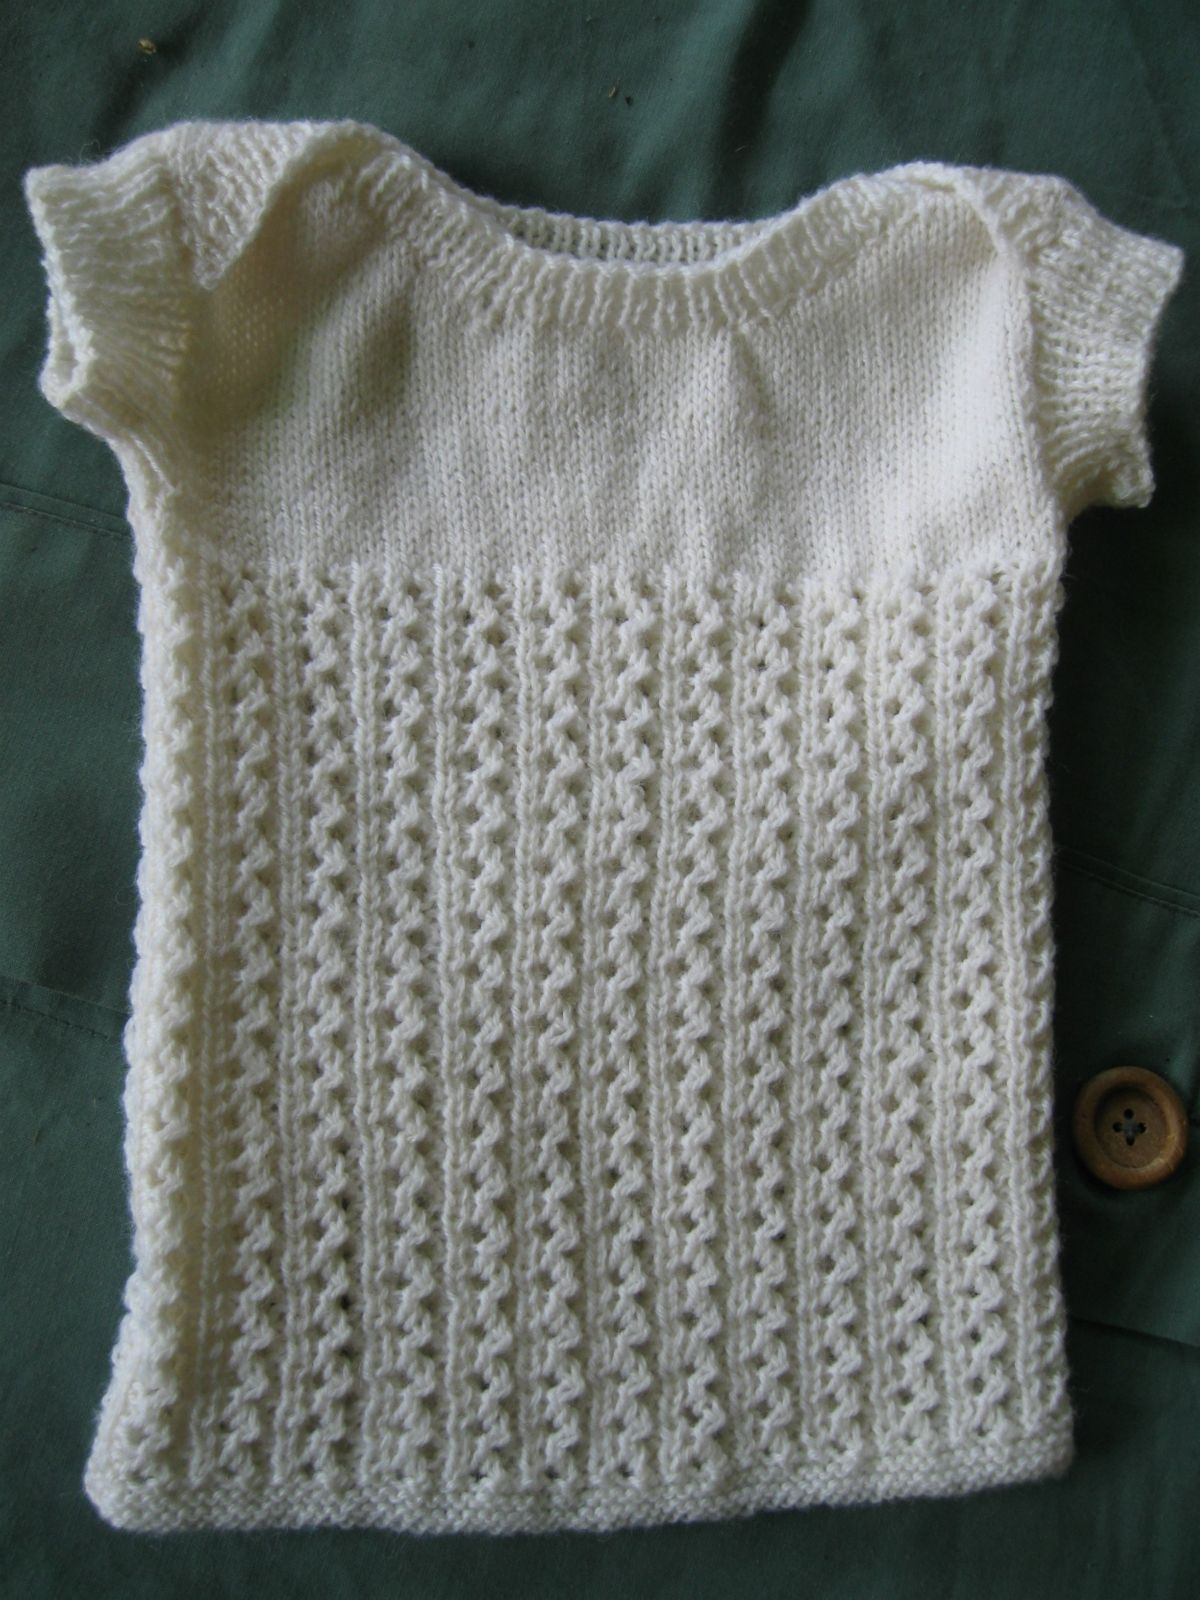 Crochet Baby Singlet Pattern Image Result For Hand Knitted Ba Singlets Ba Togs Pinterest